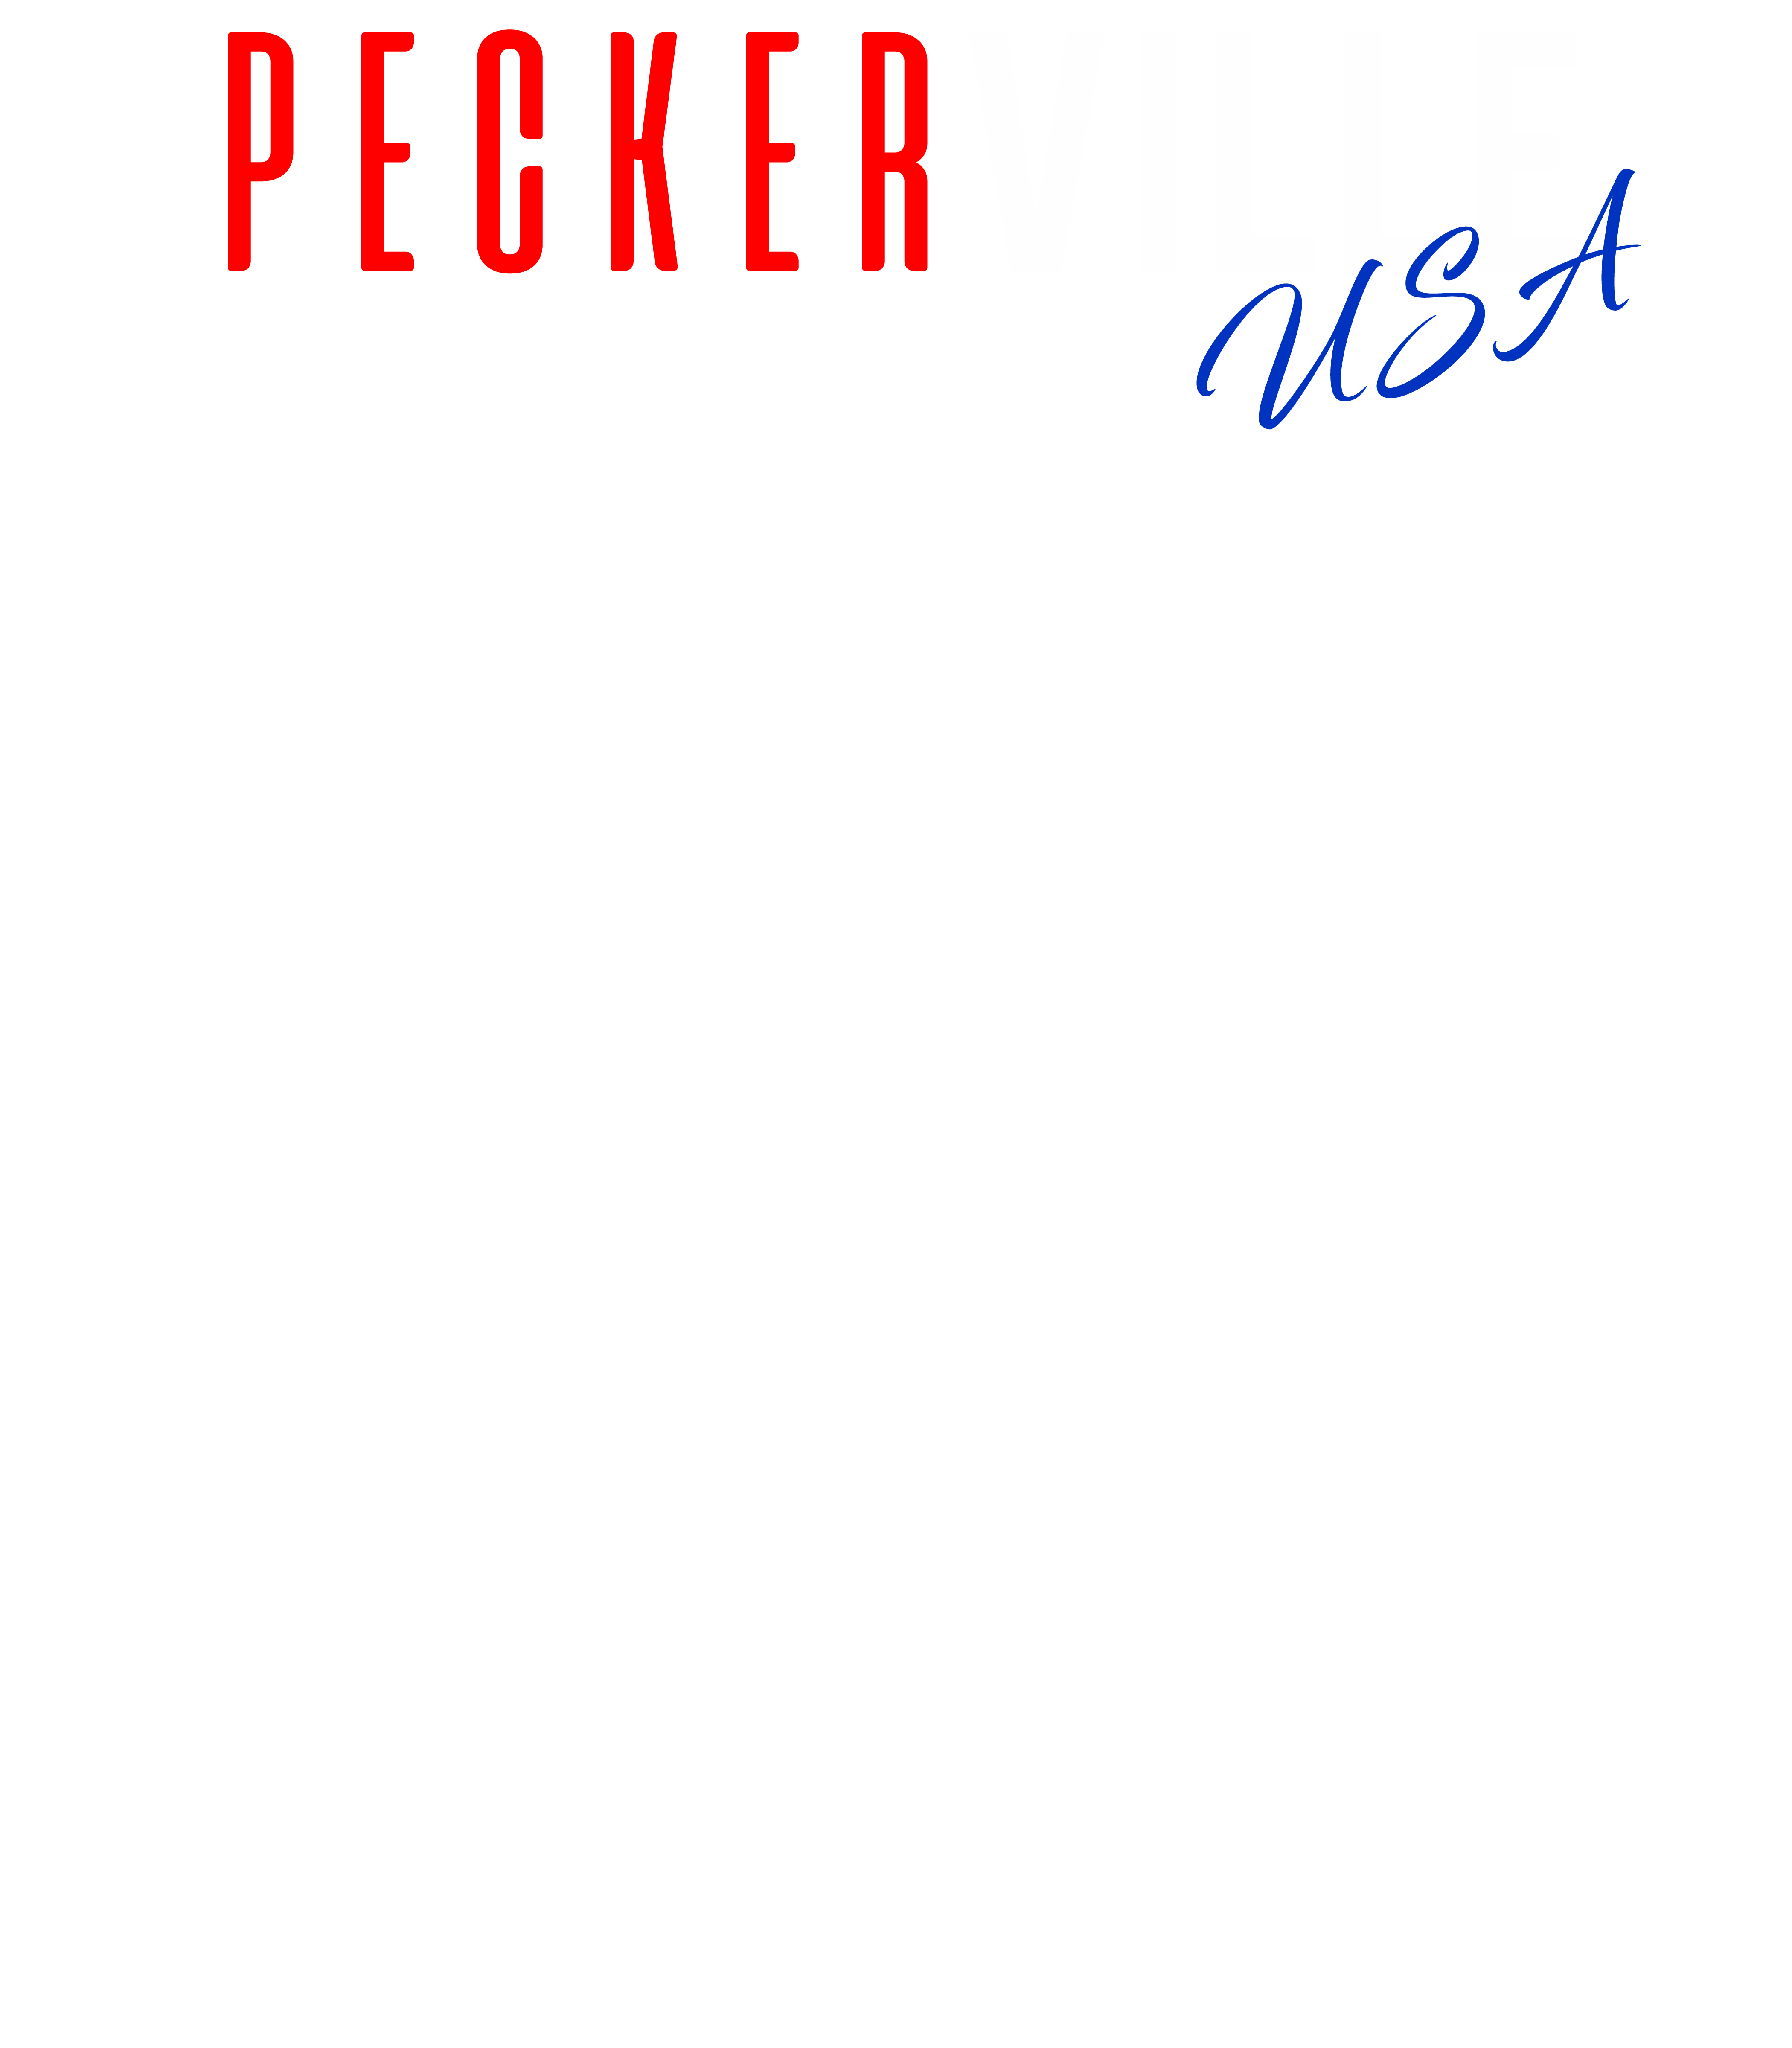 Peckerville USA